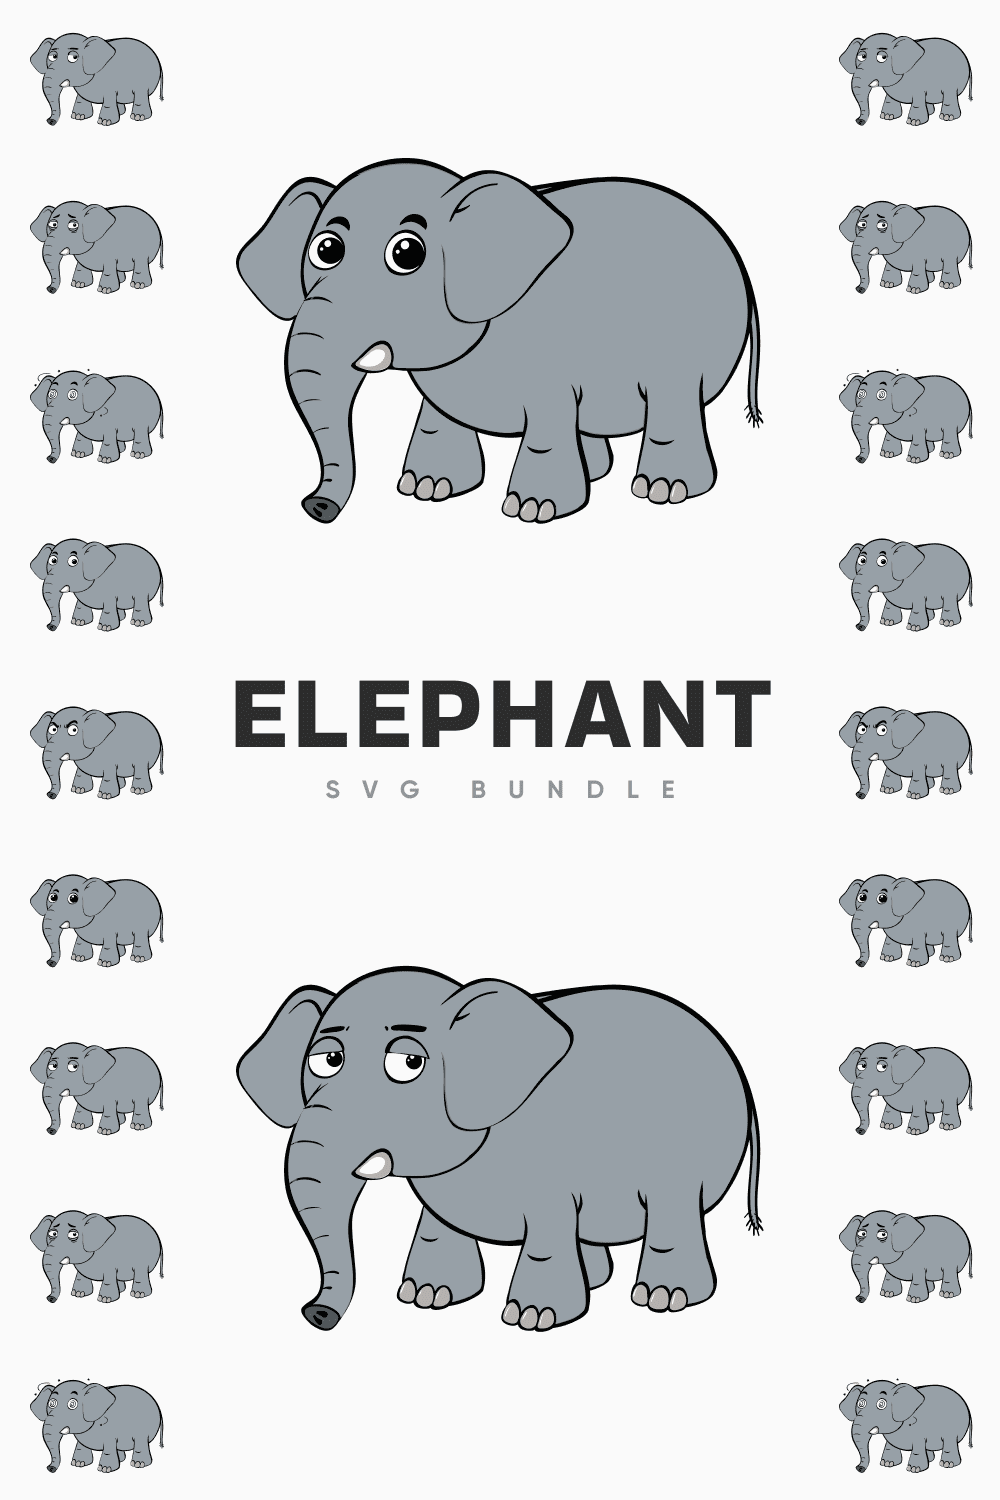 elephant svg files pinterest image.